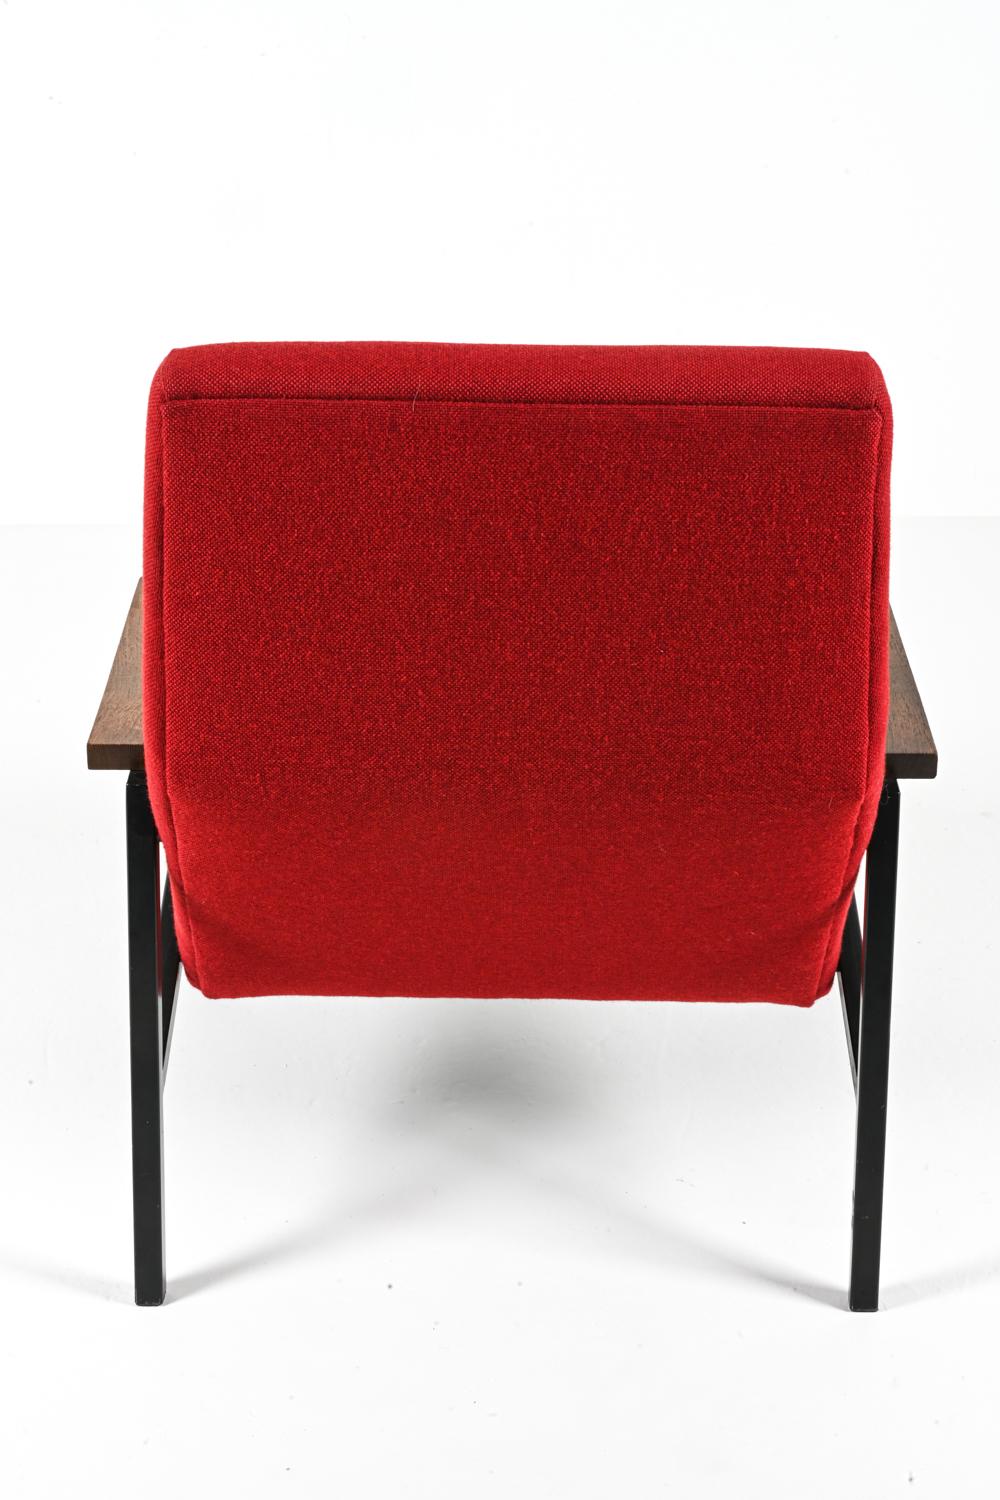 Martin Visser for 't Spectrum SZ 67 Lounge Chair For Sale 6